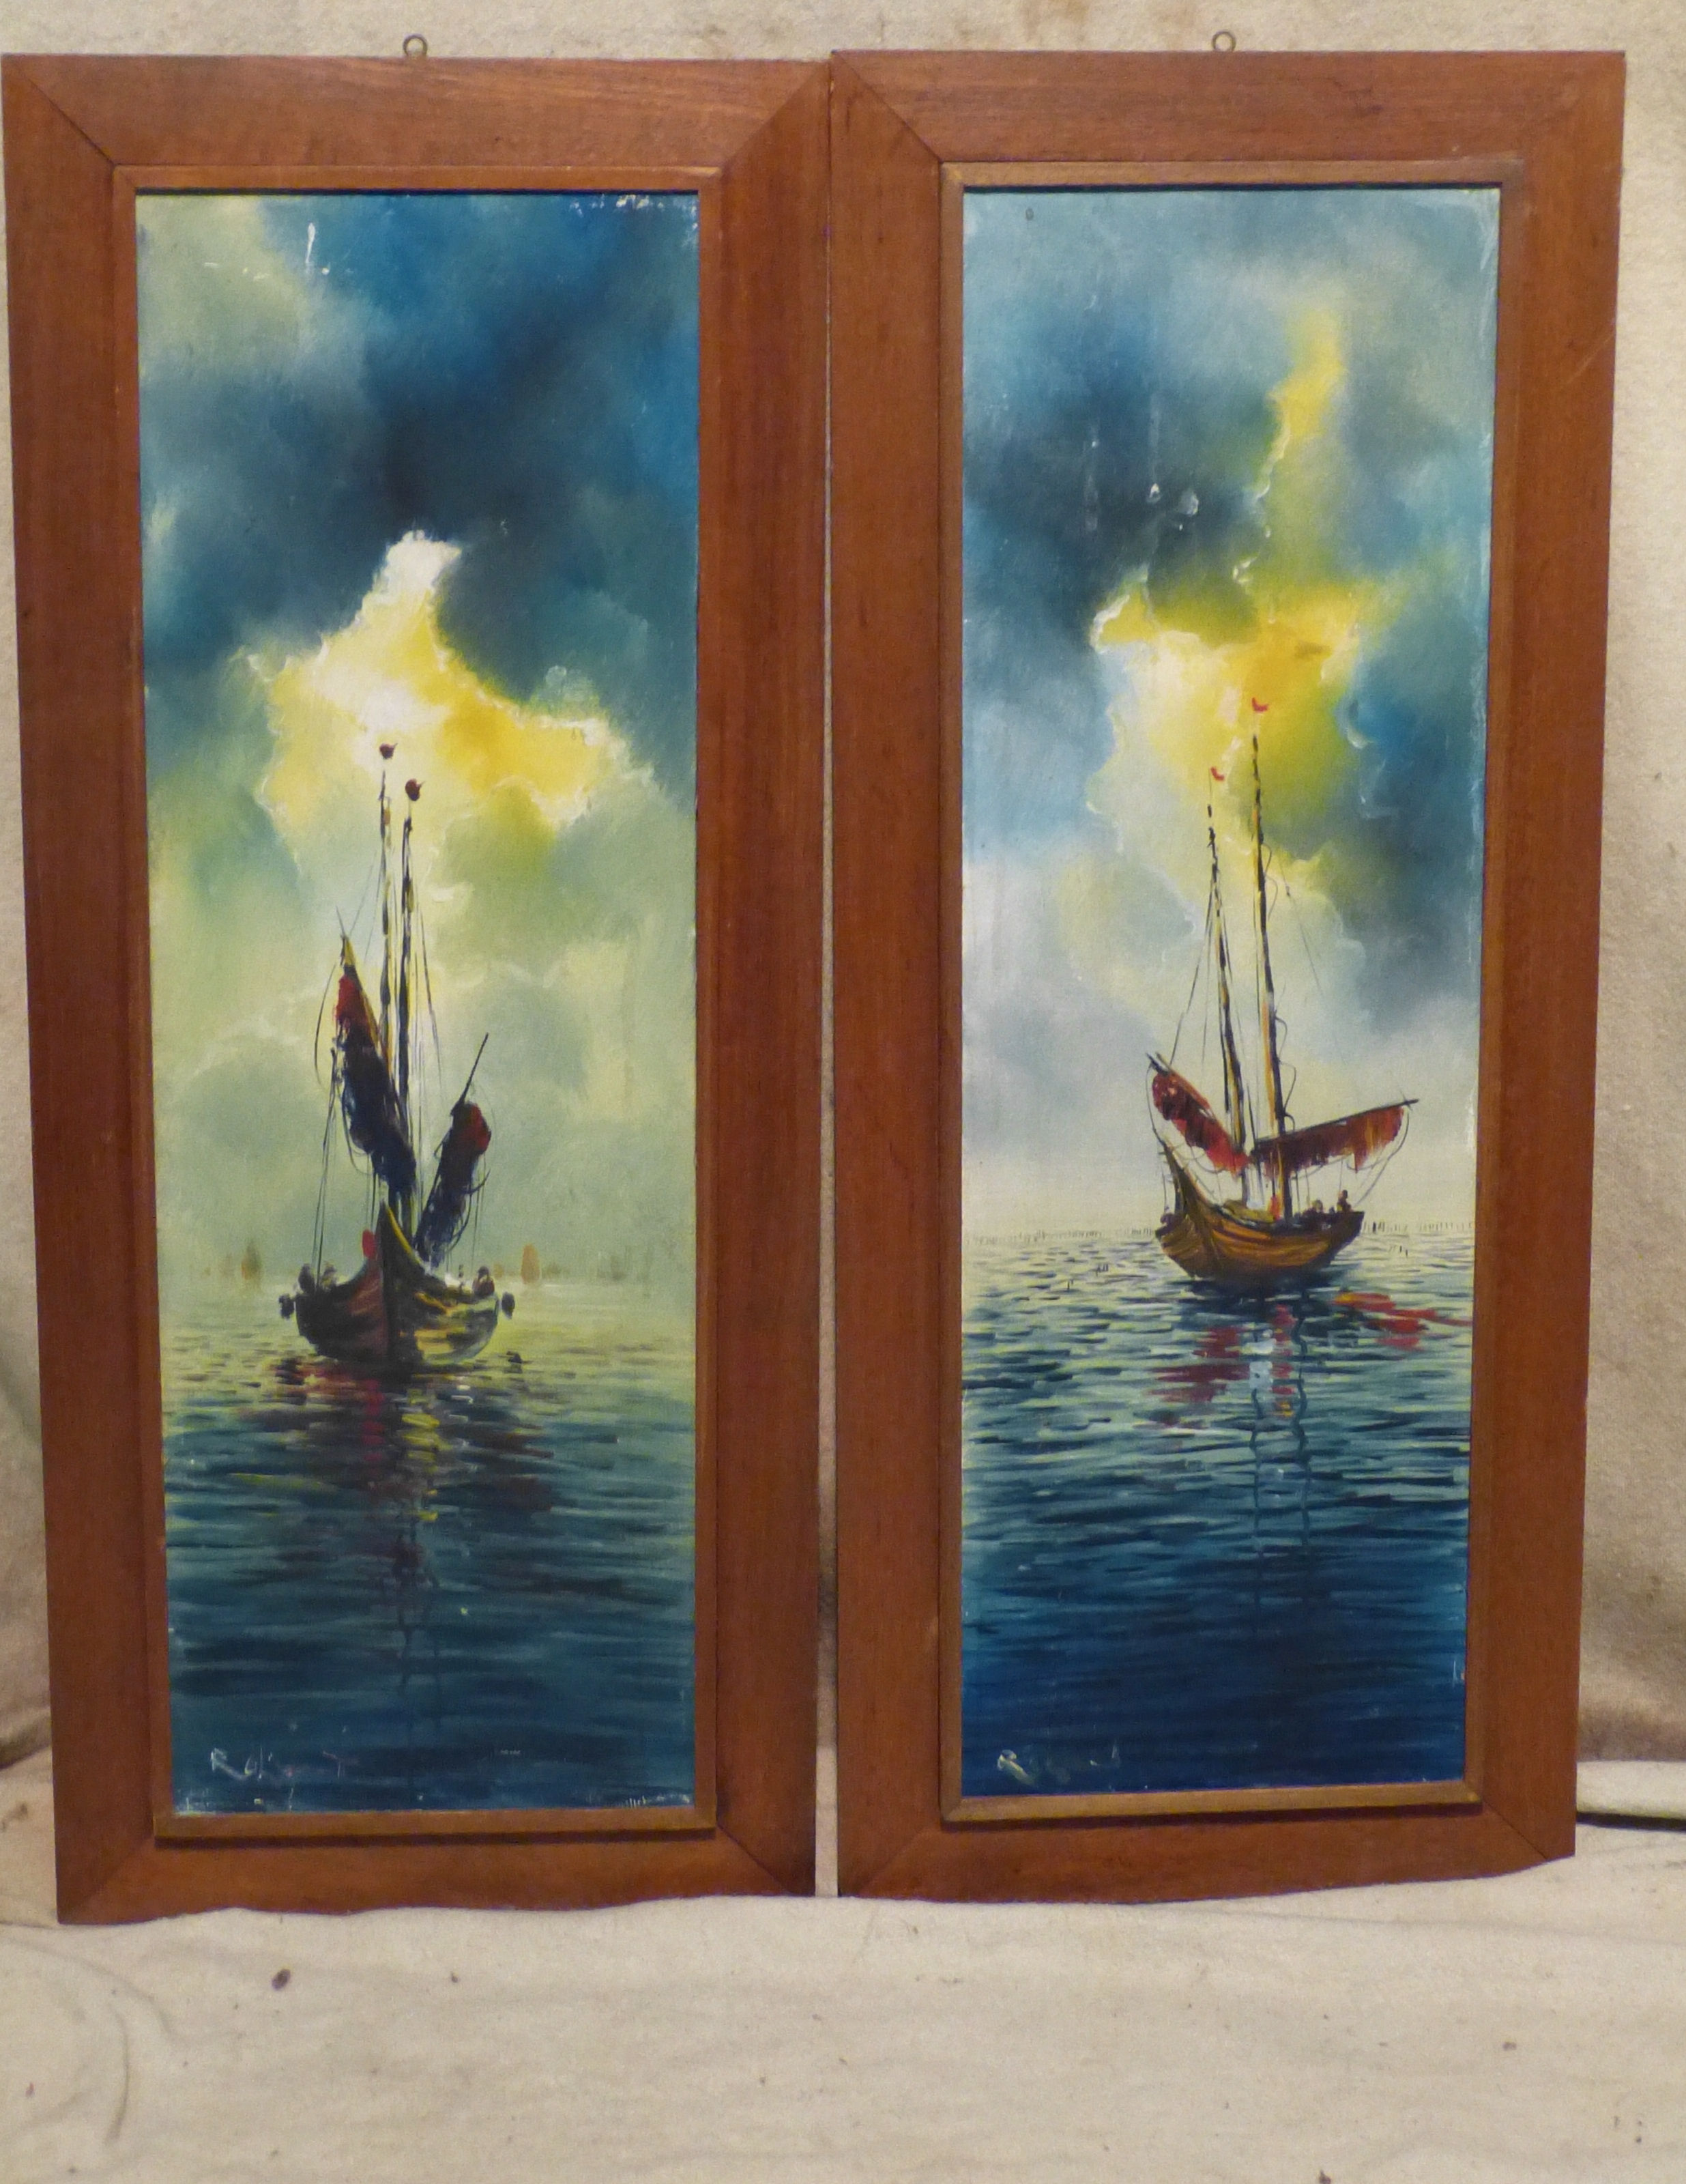 A Pair of Marine Oils on Canvas depictin